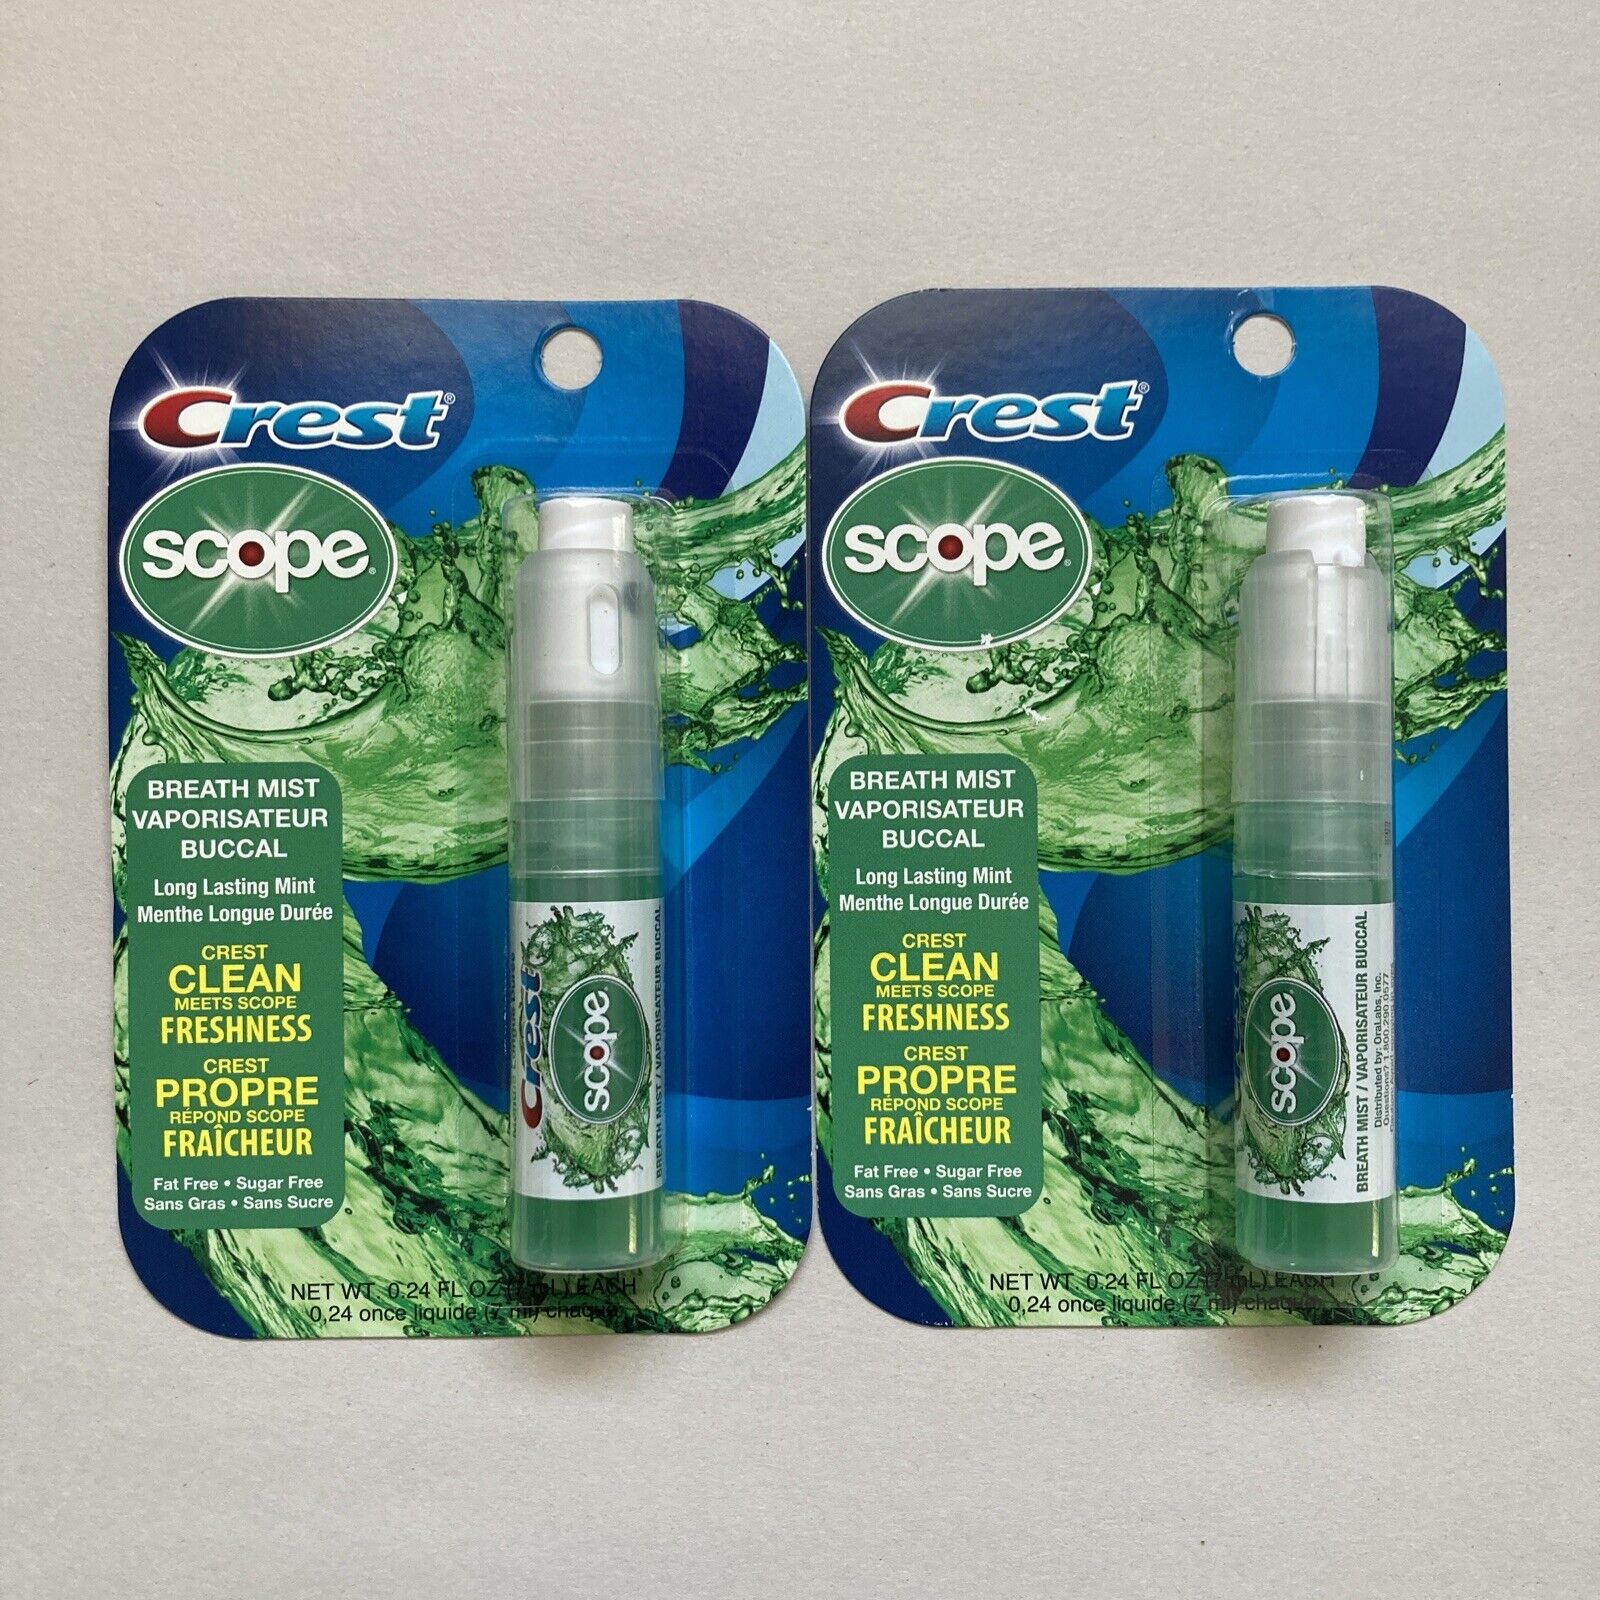 2x Crest Scope Breath Mist Freshener Travel Size, 0.24 Fl Oz Each (7ml)